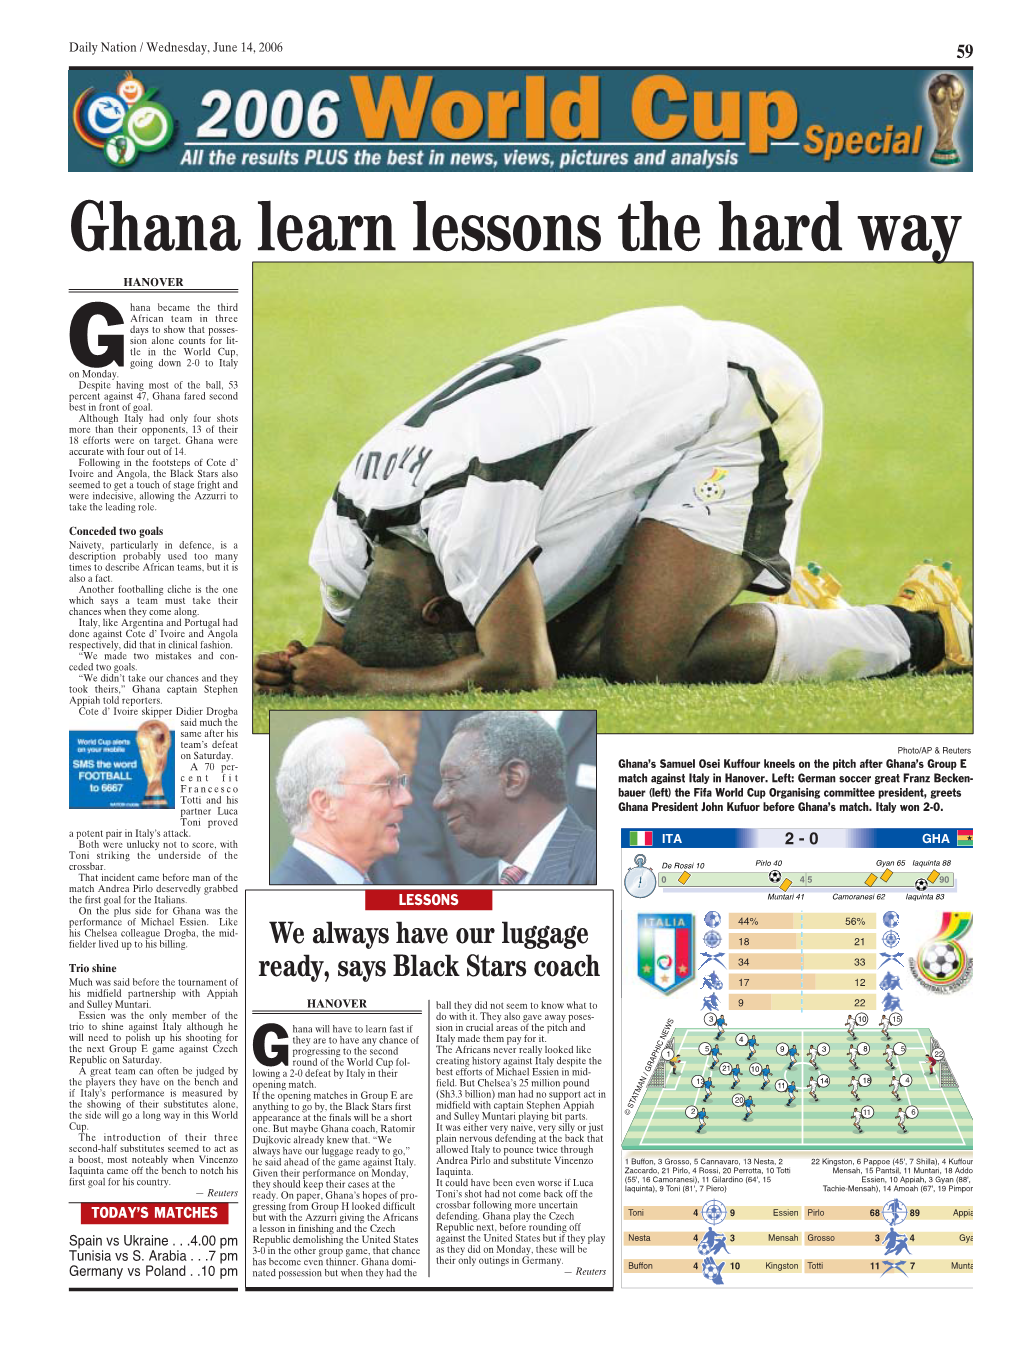 Ghana Learn Lessons the Hard Way